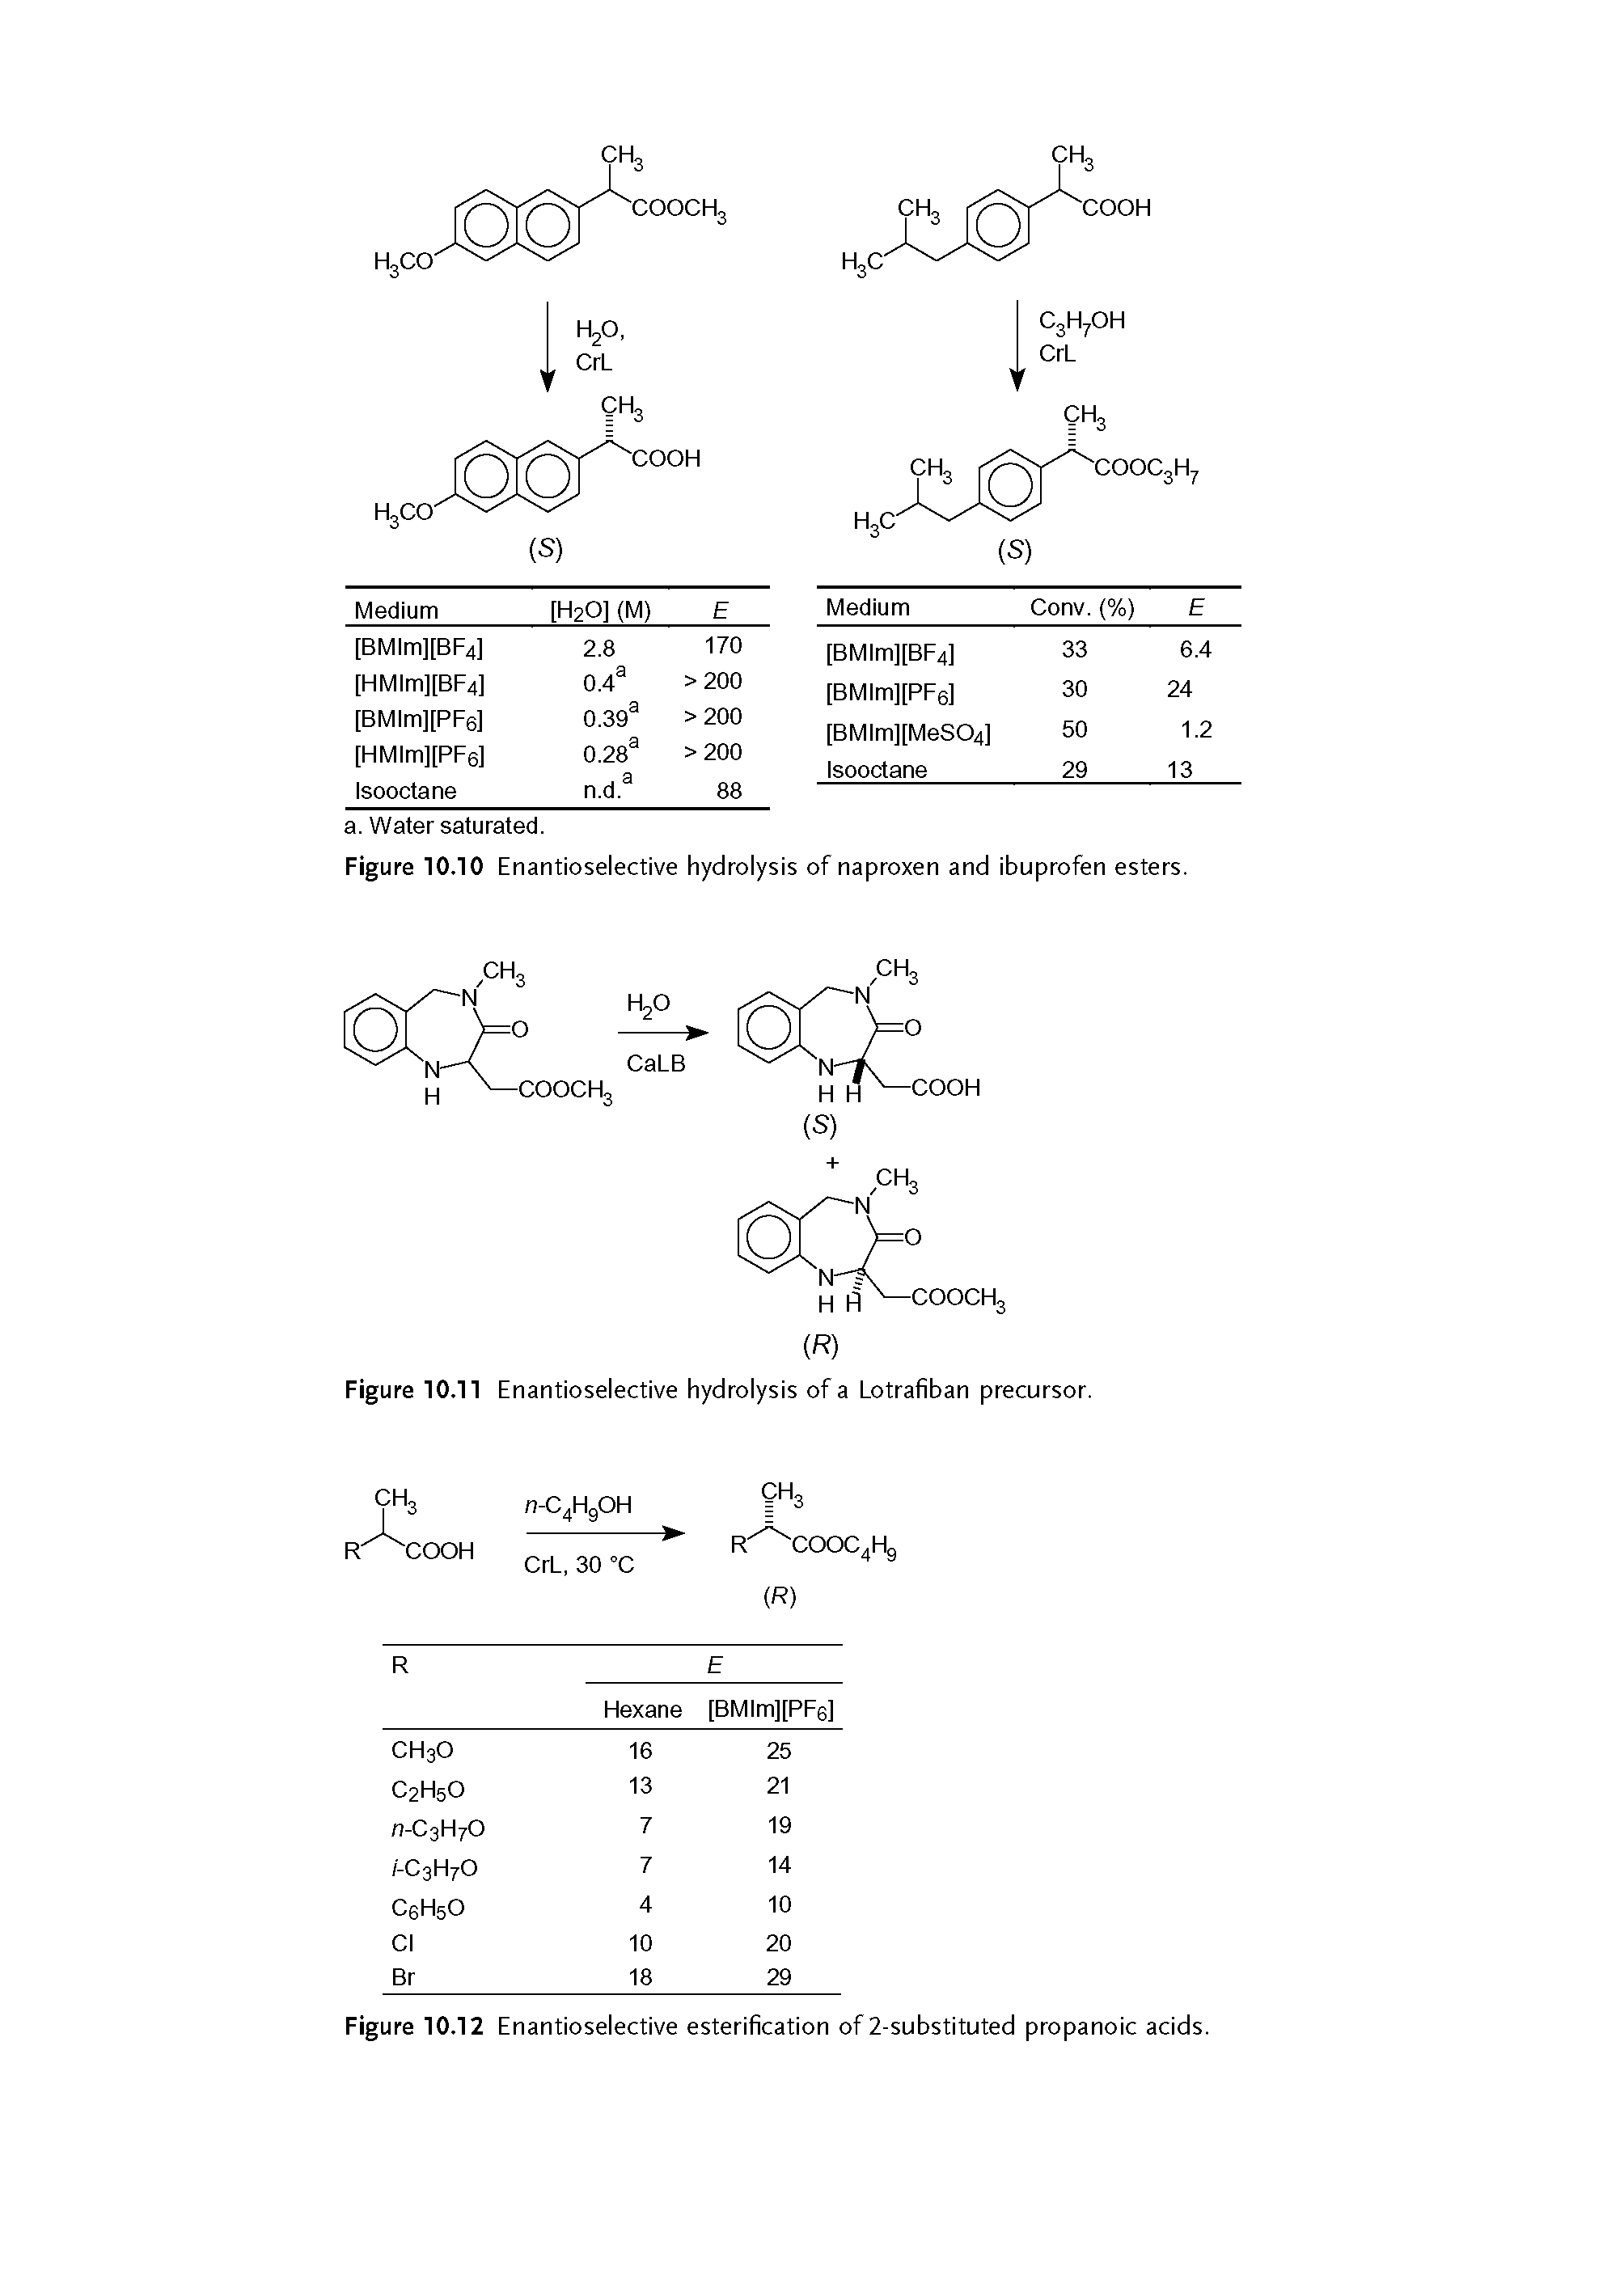 Figure 10.12 Enantioselective esterification of 2-substituted propanoic acids.